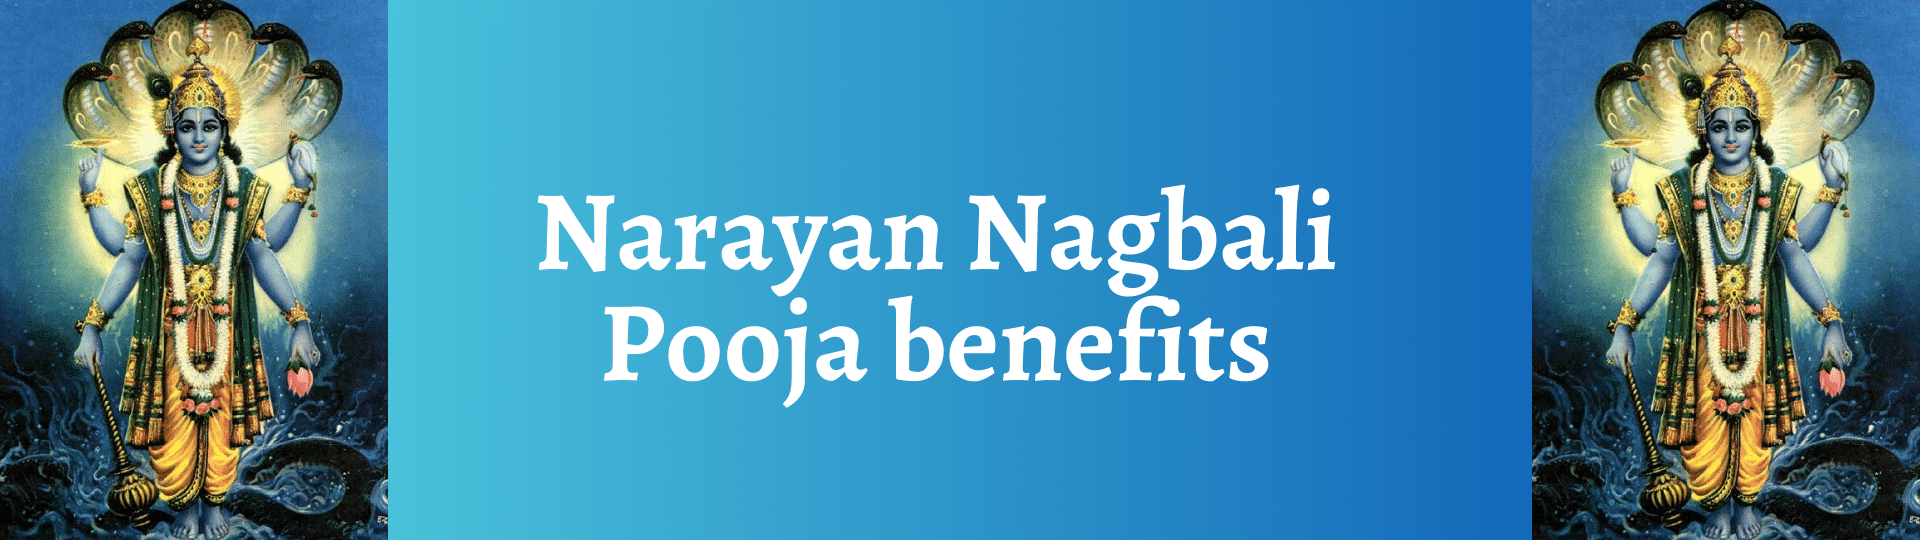 Narayan Nagbali Pooja benefits